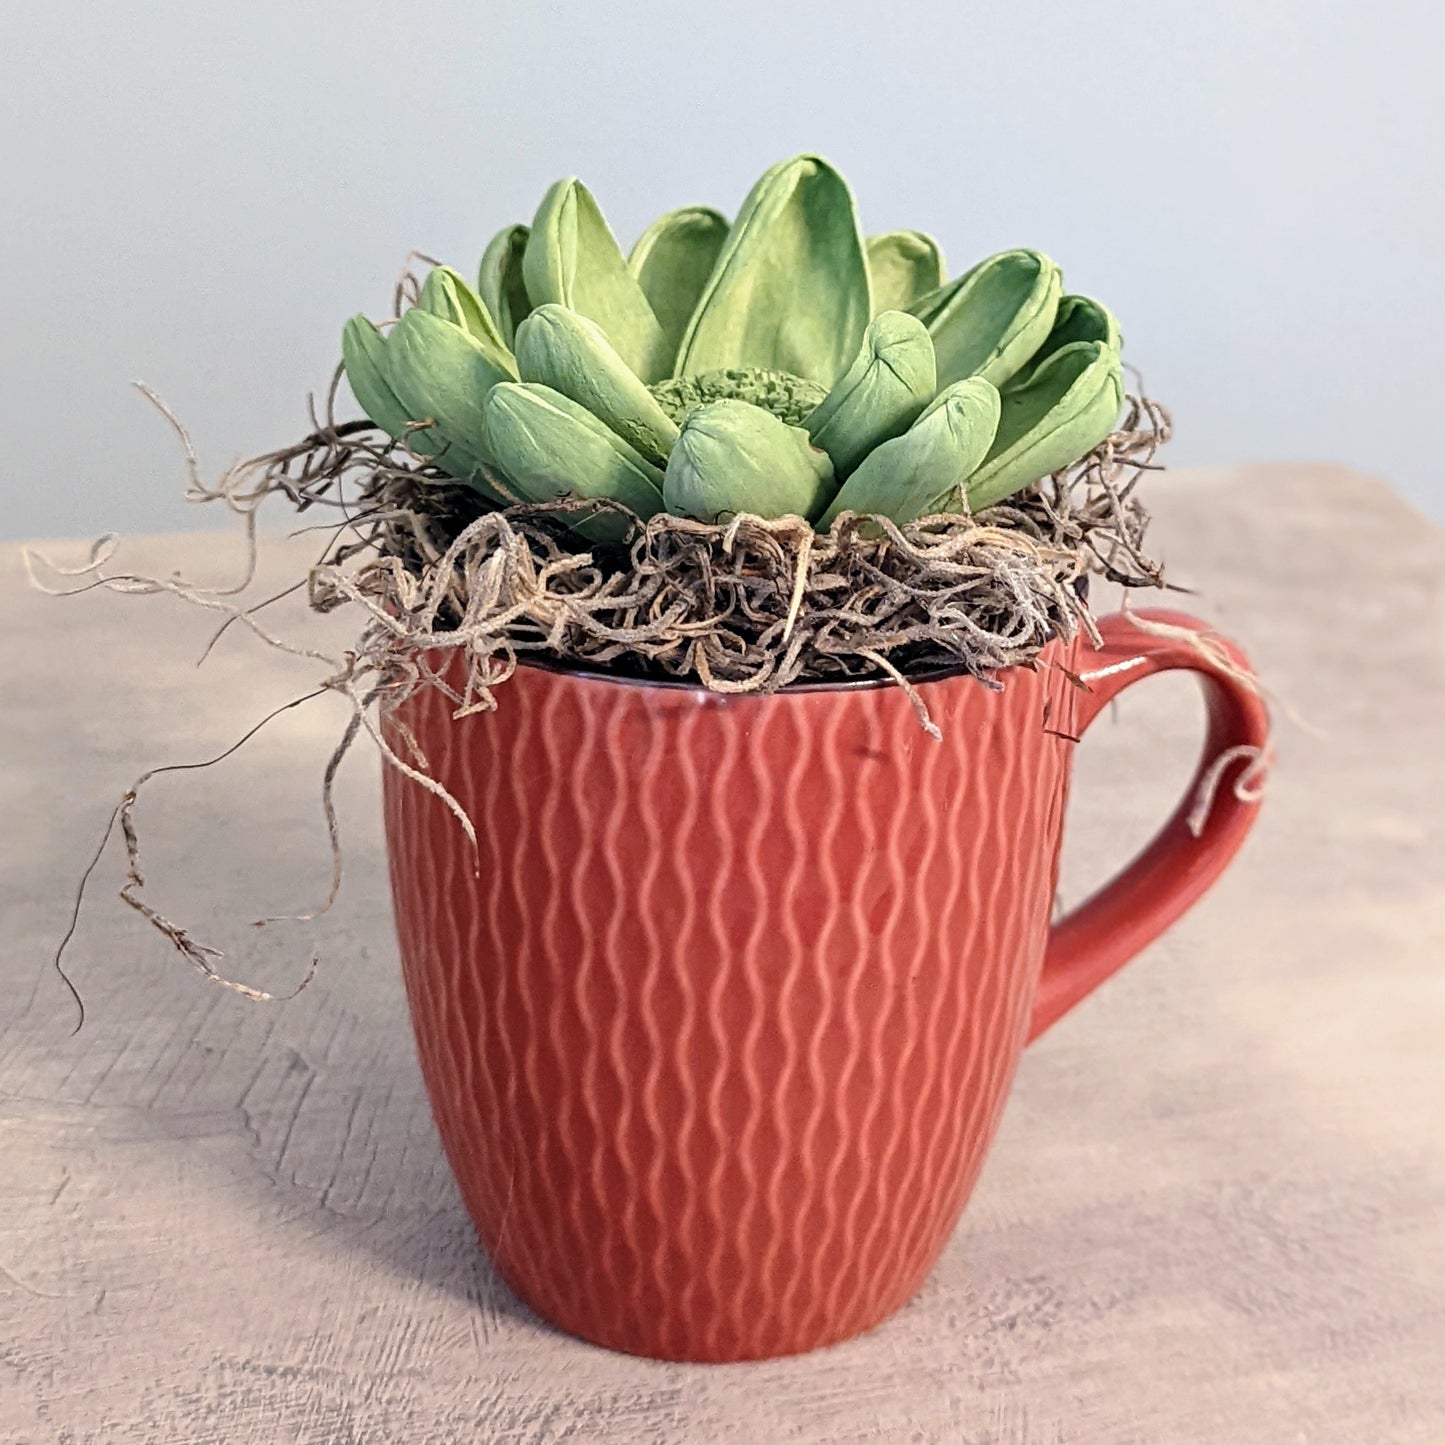 The Cactus Cup: "Pumpkin Spice" Edition